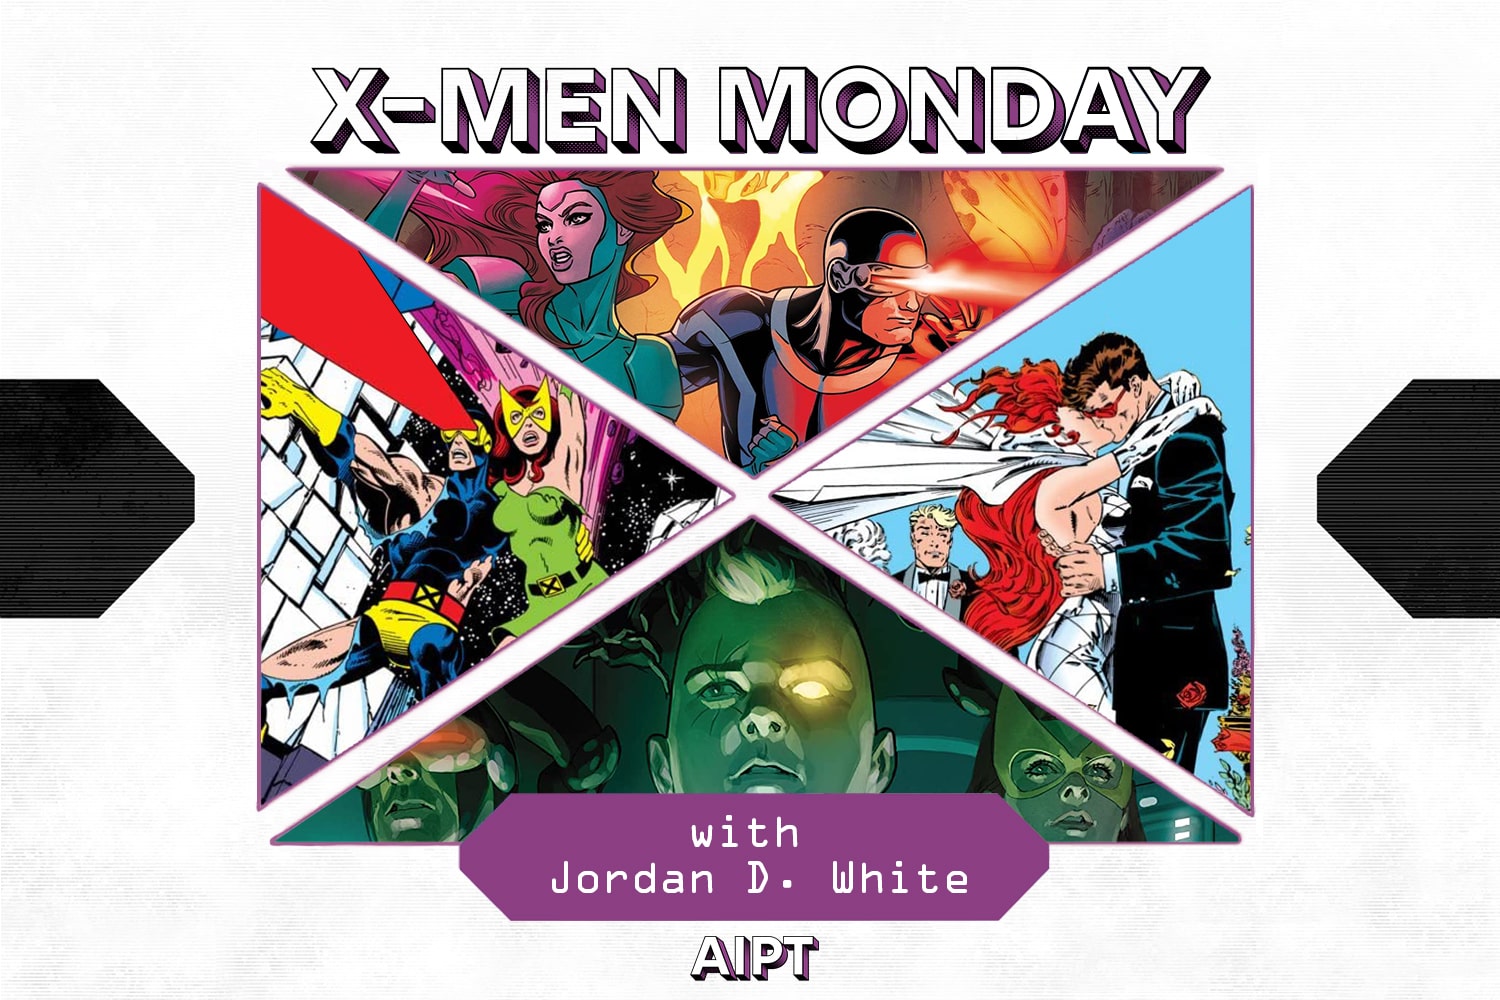 X-Men Monday #95 - Cyclops and Jean Grey With Jordan D. White